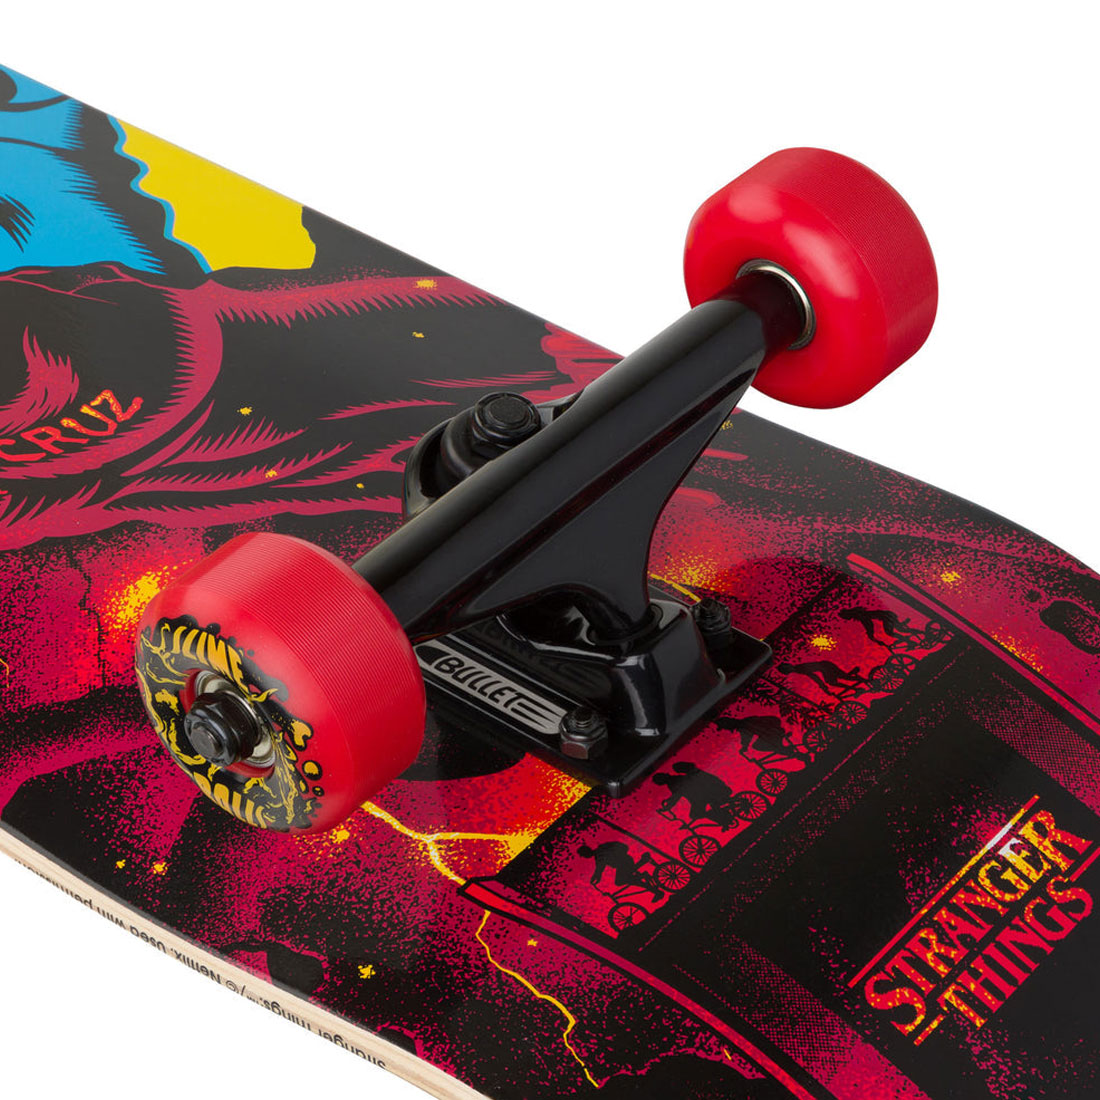 Santa Cruz x Stranger Things Screaming Hand 8.0 Complete Skateboard Completes Modern Street